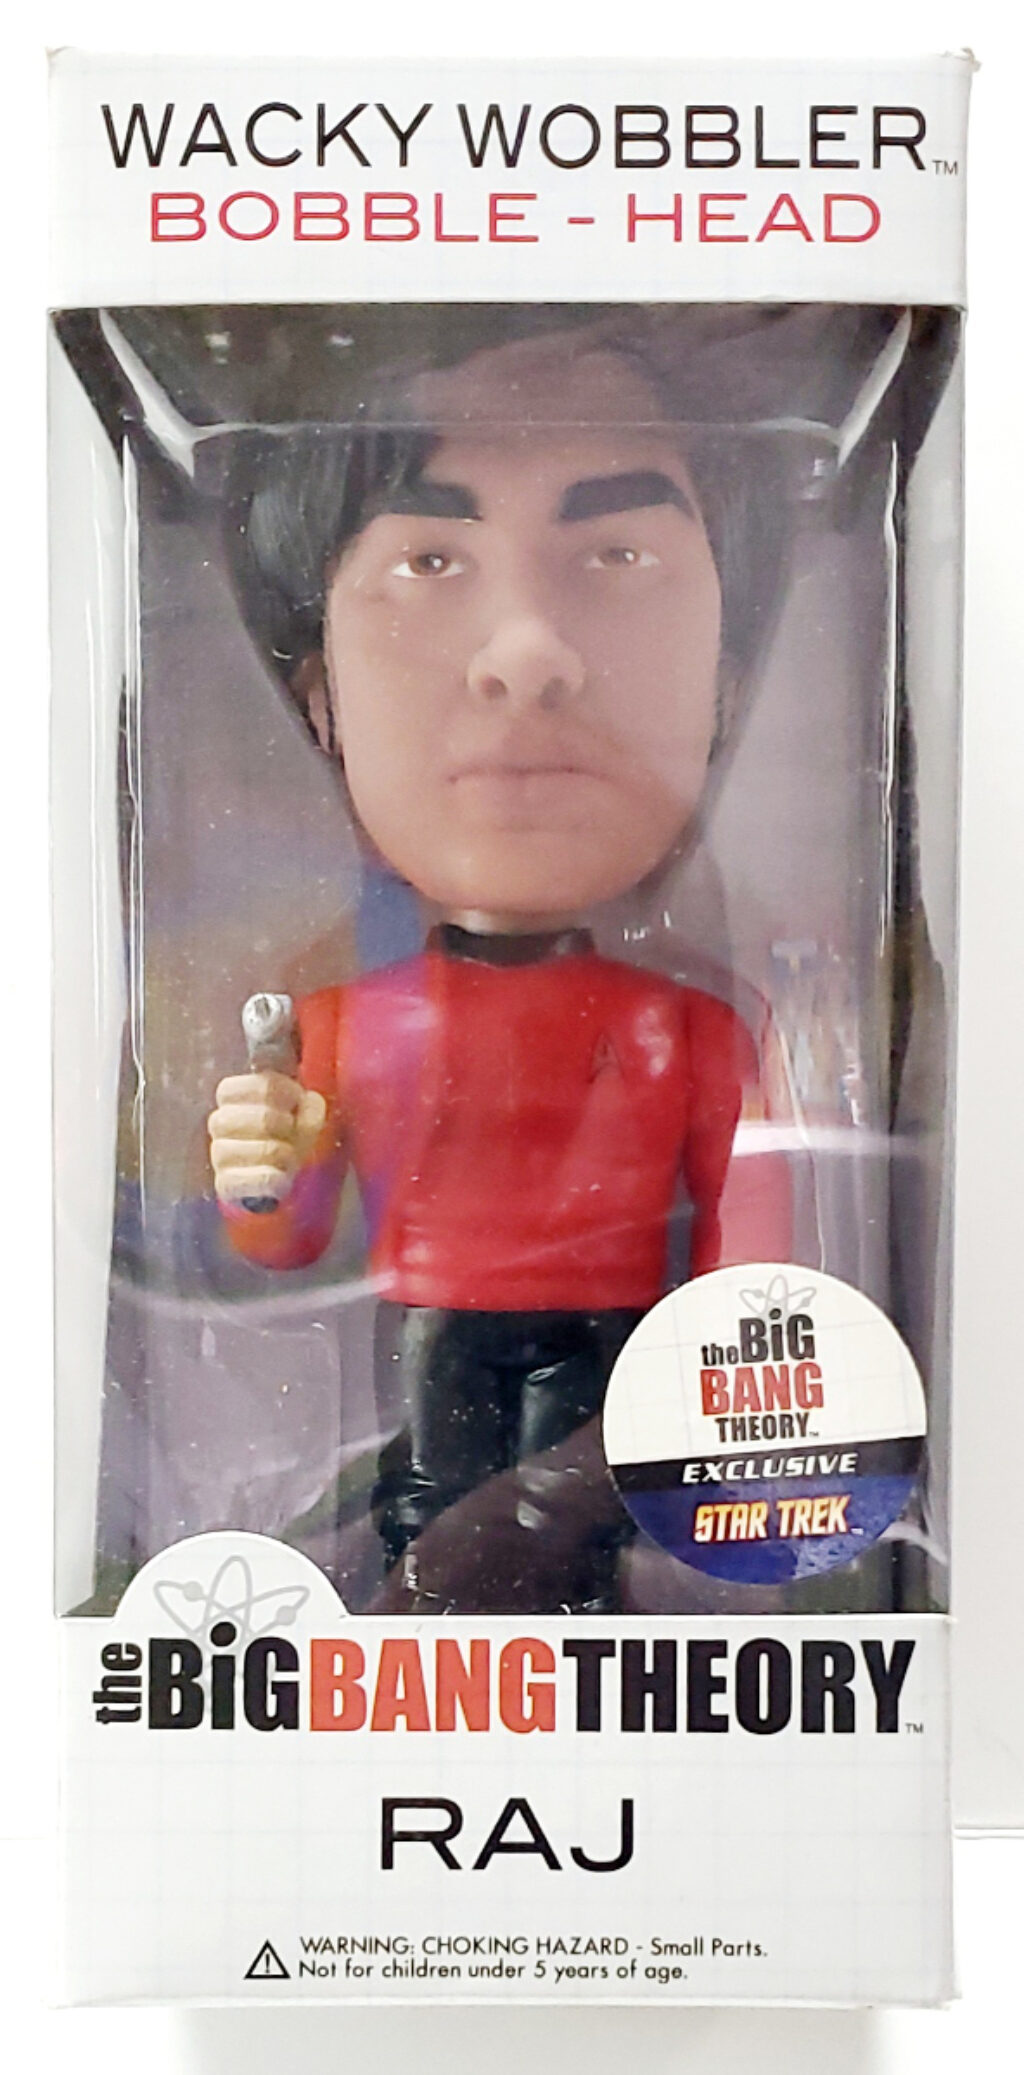 Big Bang Theory Star Trek Commander Raj Koothrapalli Wacky Wobbler Bobblehead from Funko 1